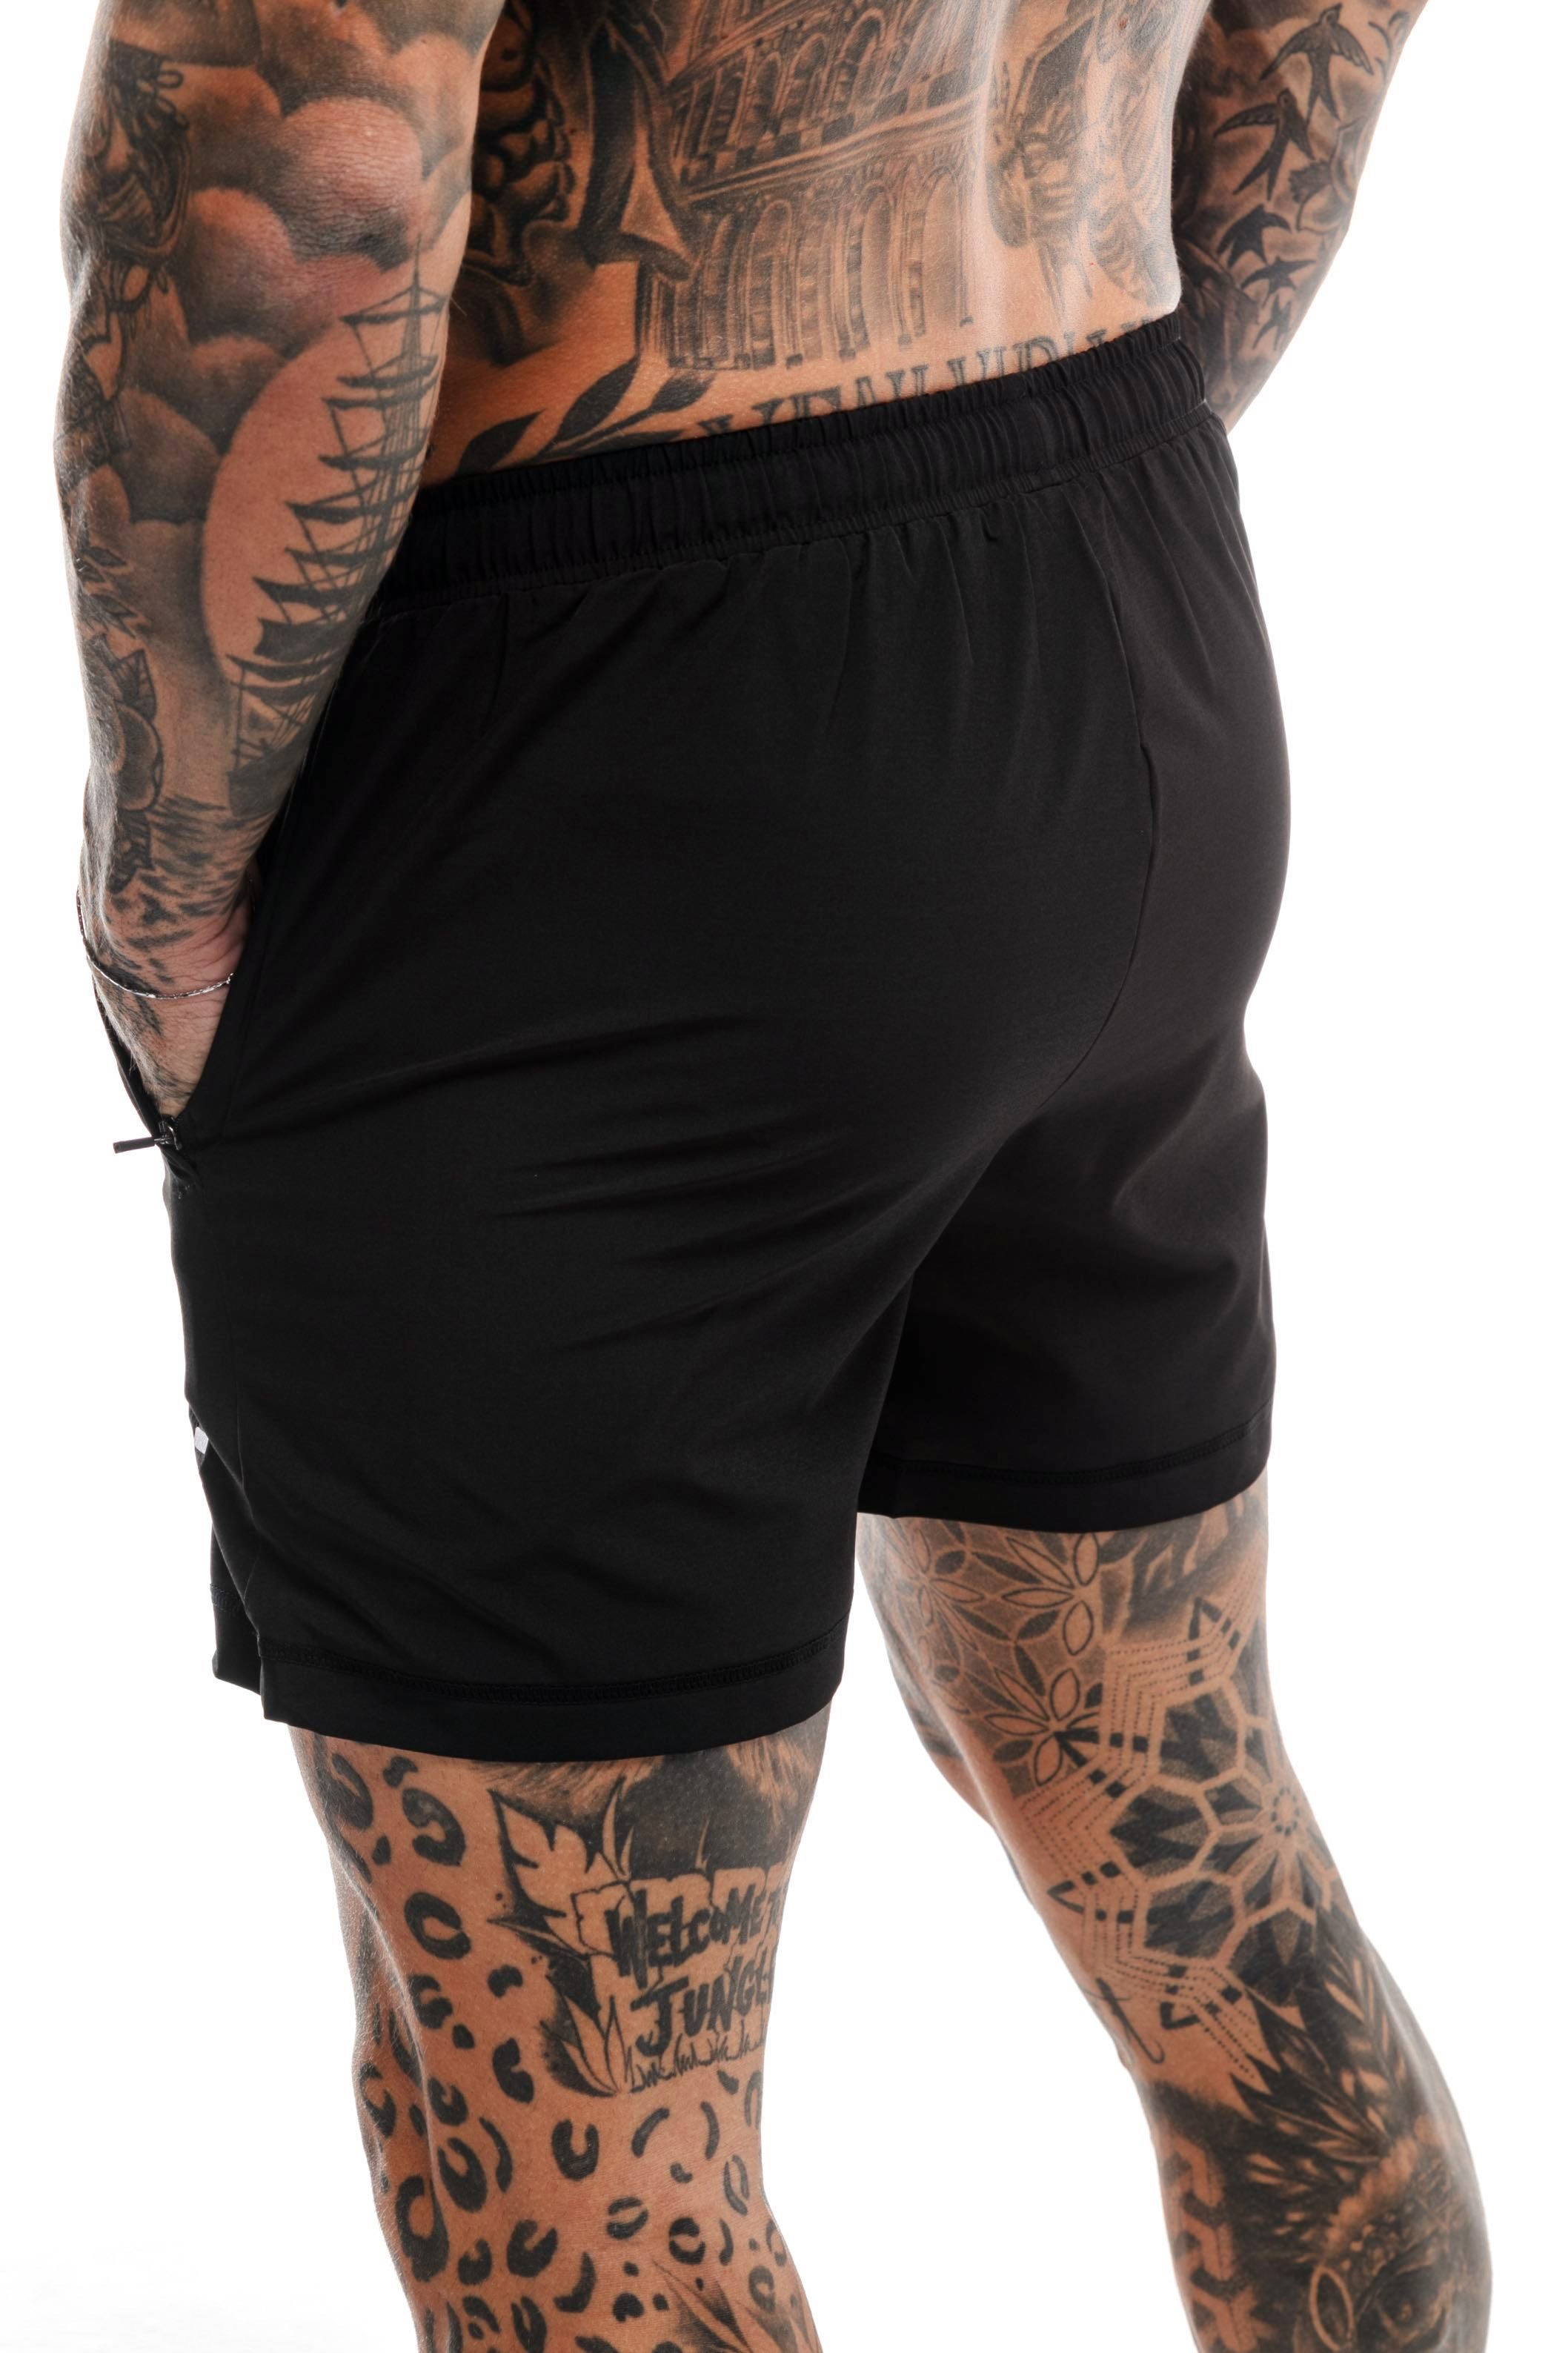 GymFreak Mens 365 Shorts - Black - 3.5inch